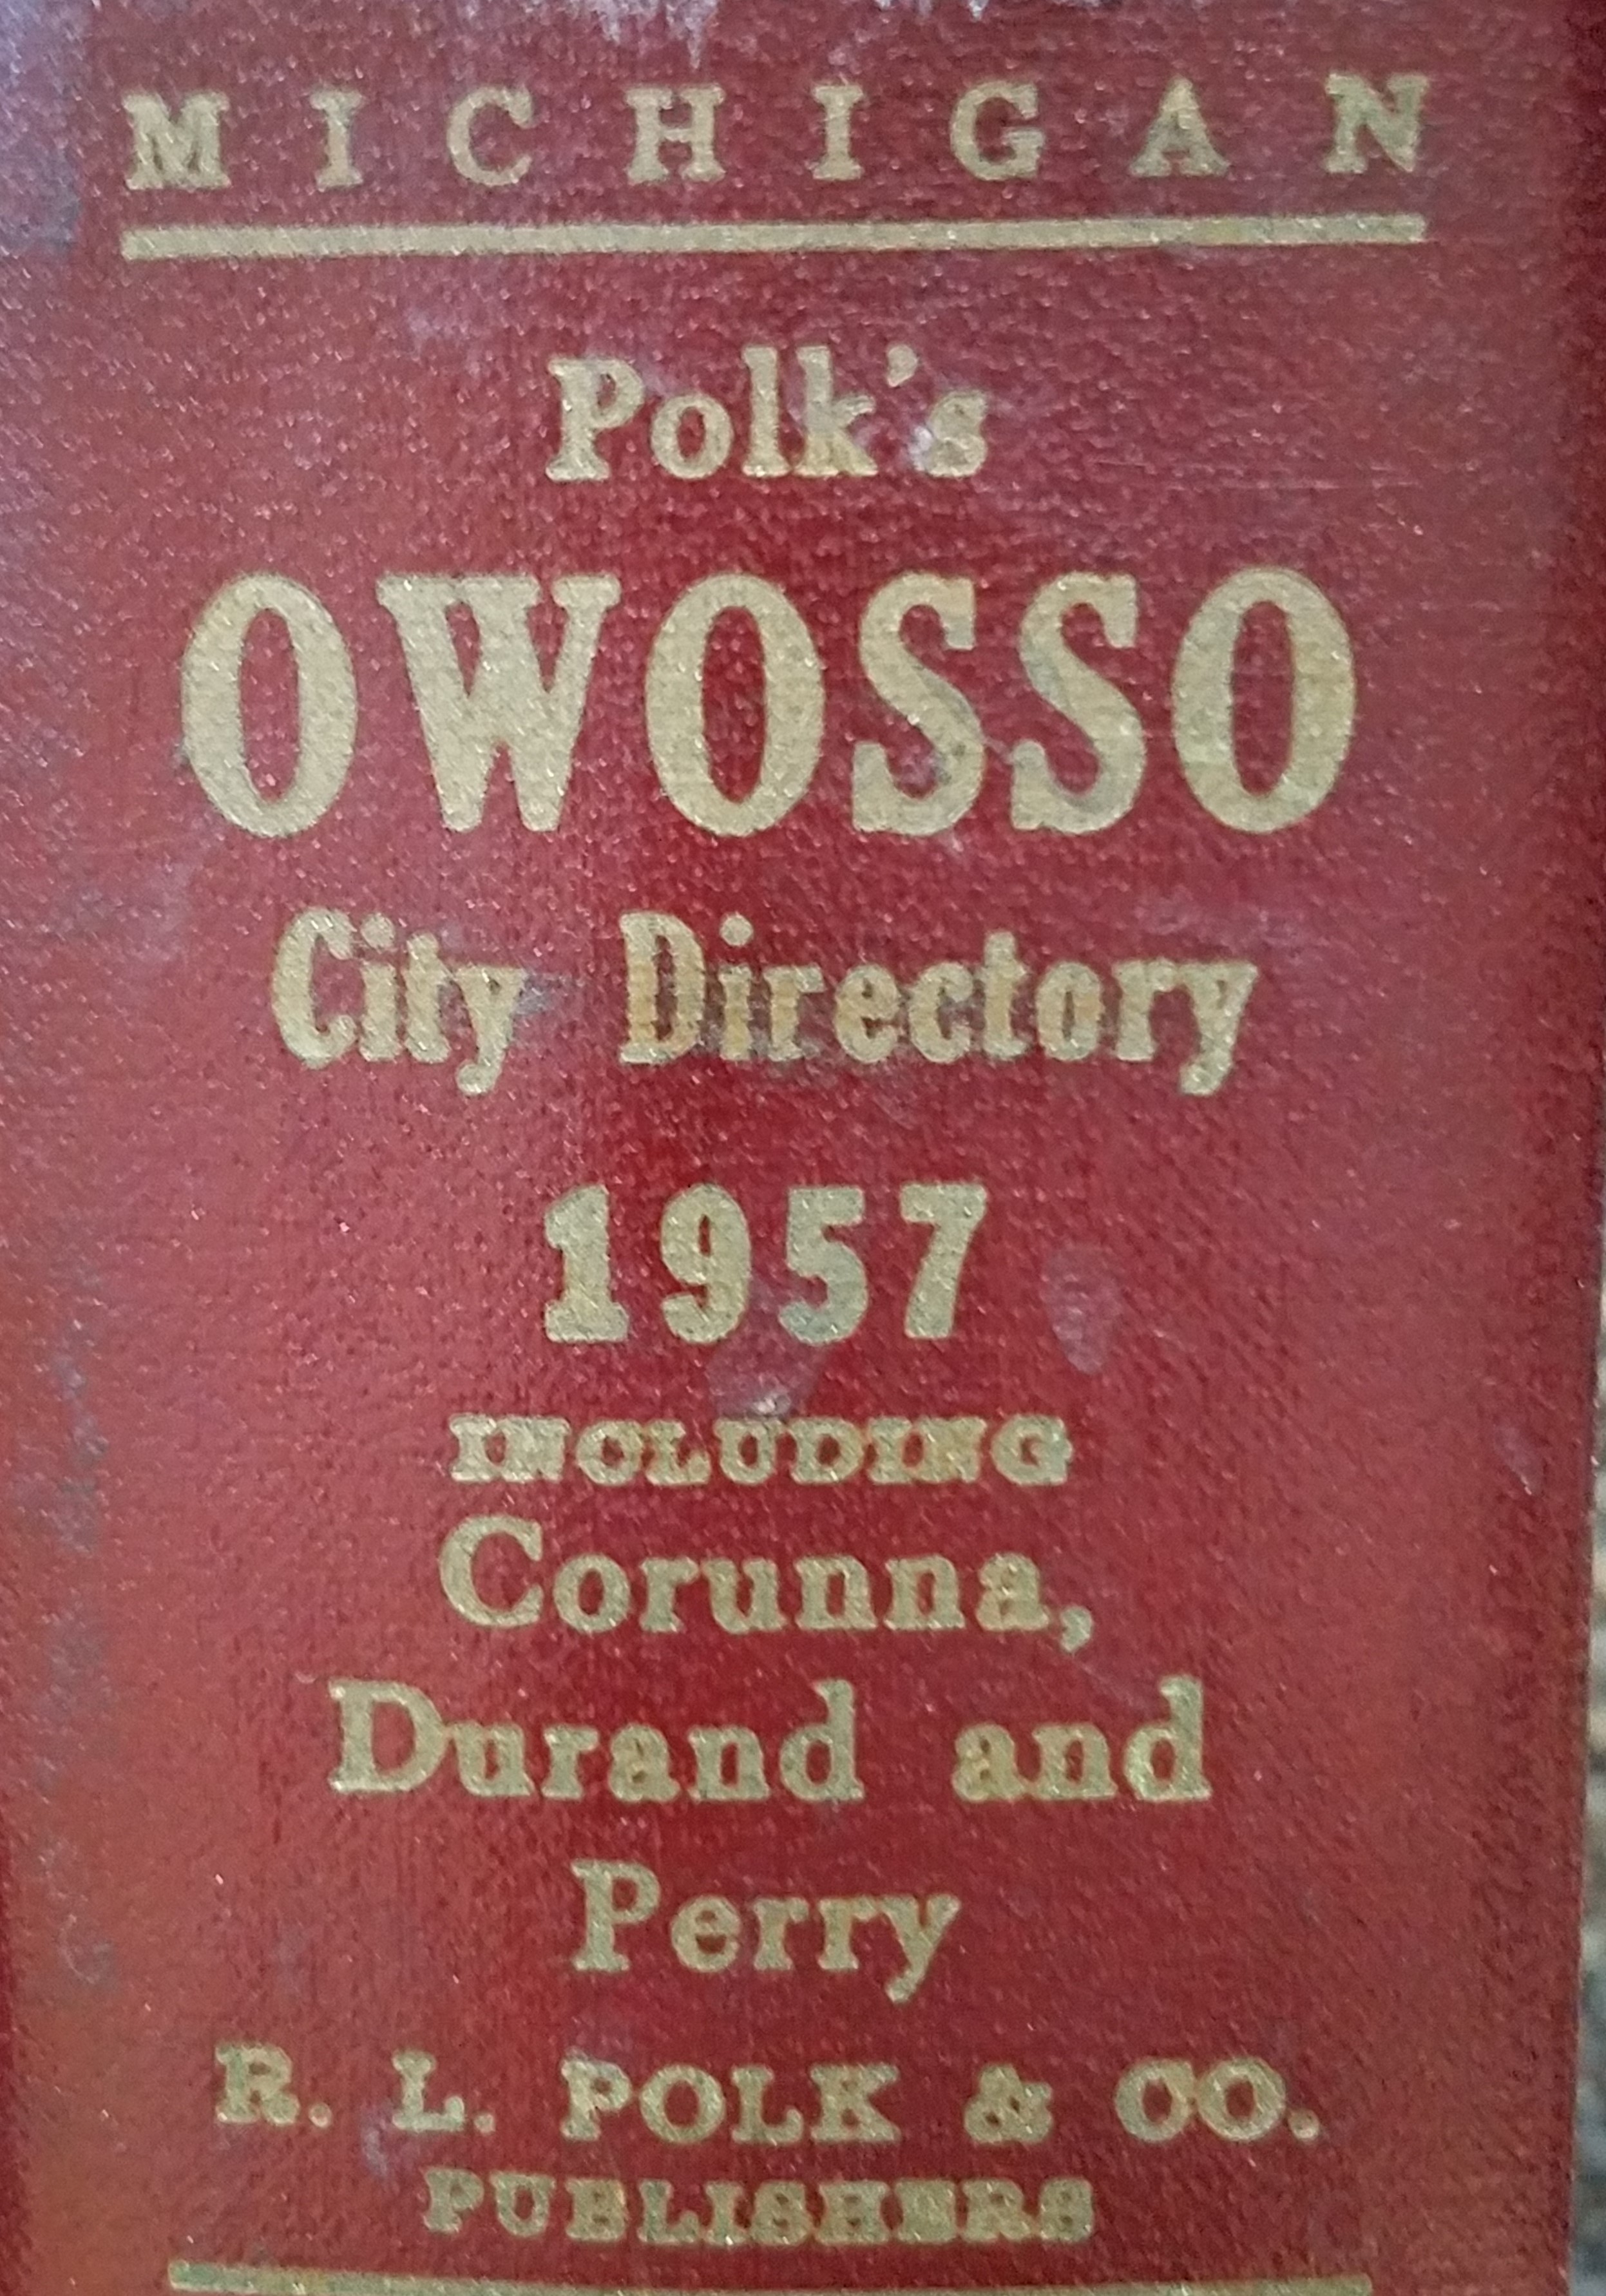 Polk's Owosso City Directory 1957 book cover.